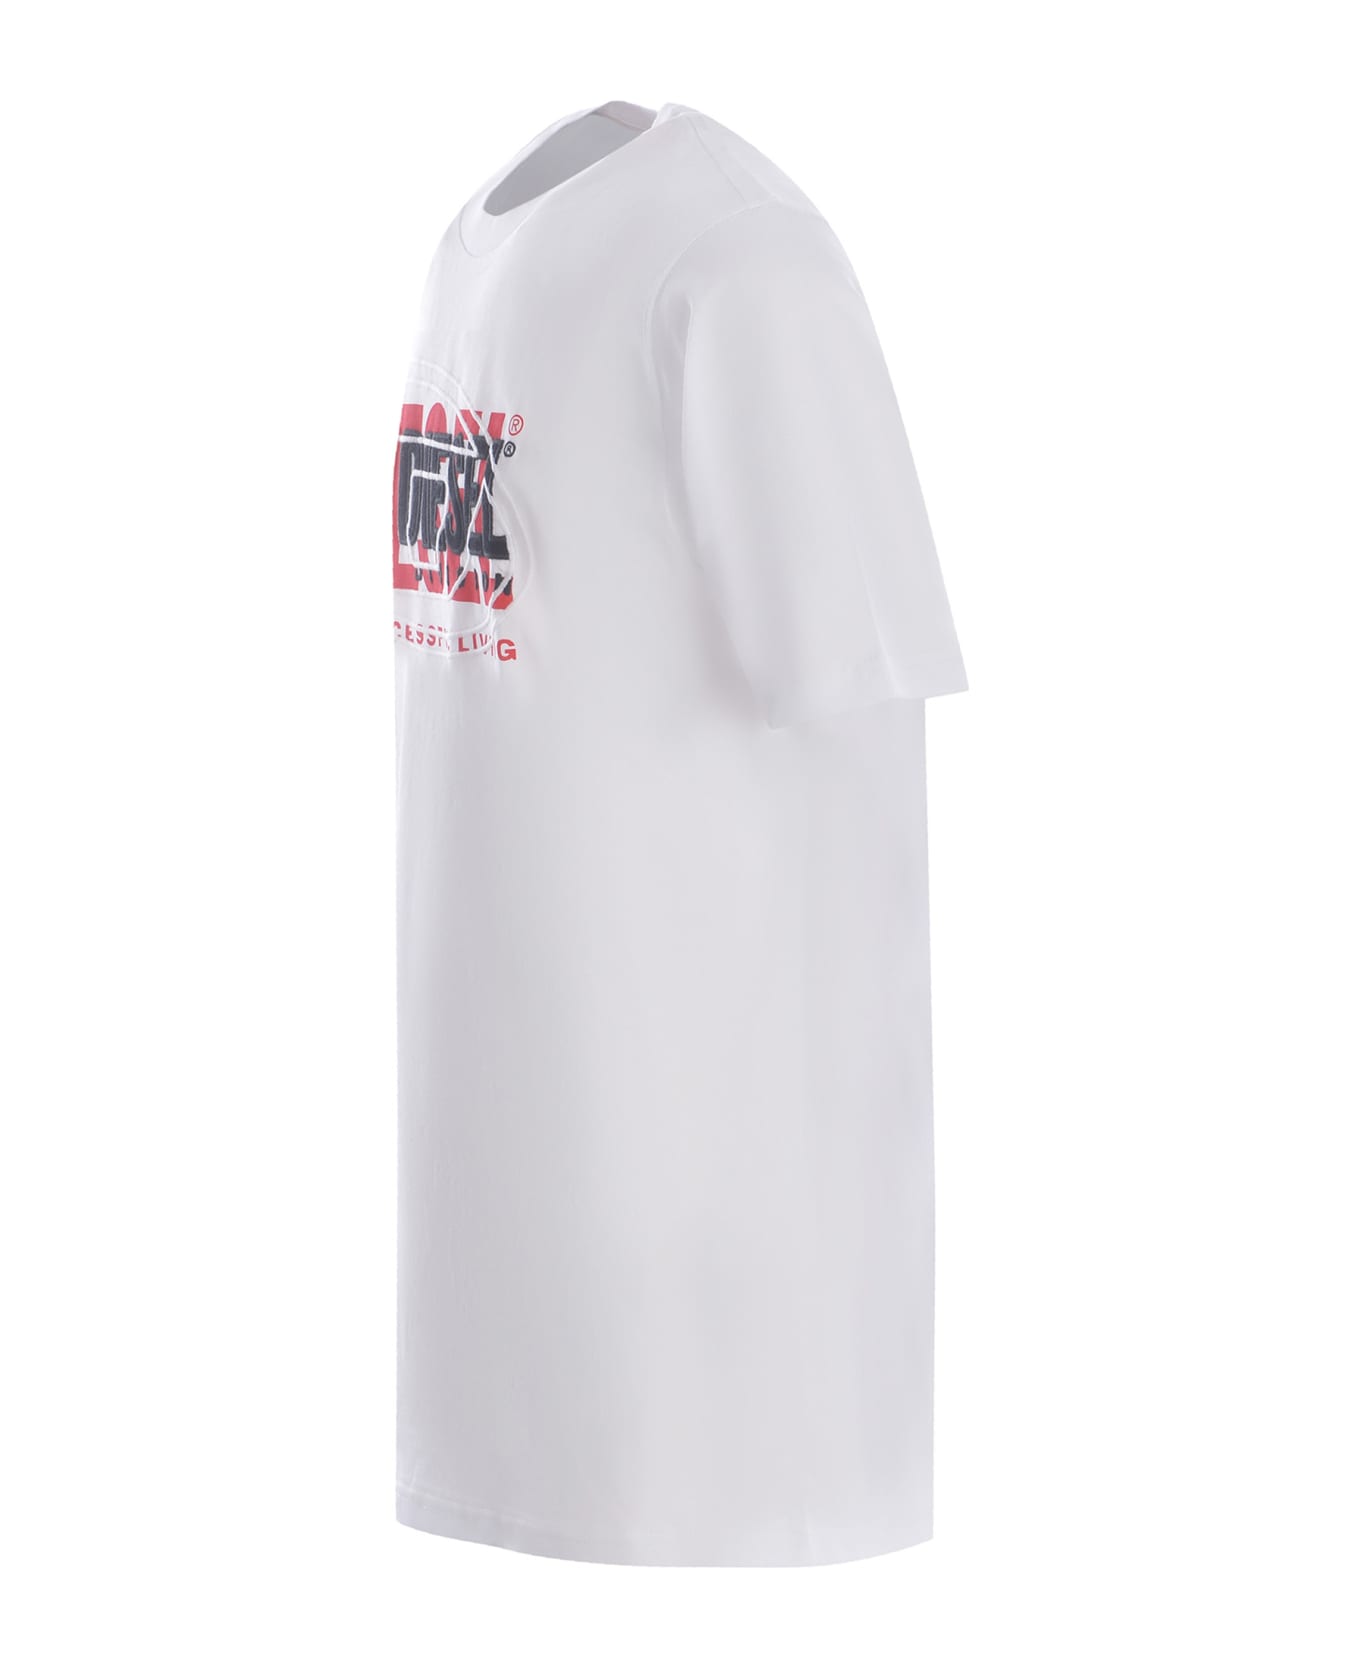 Diesel T-boxt Layered Logo T-shirt - White シャツ